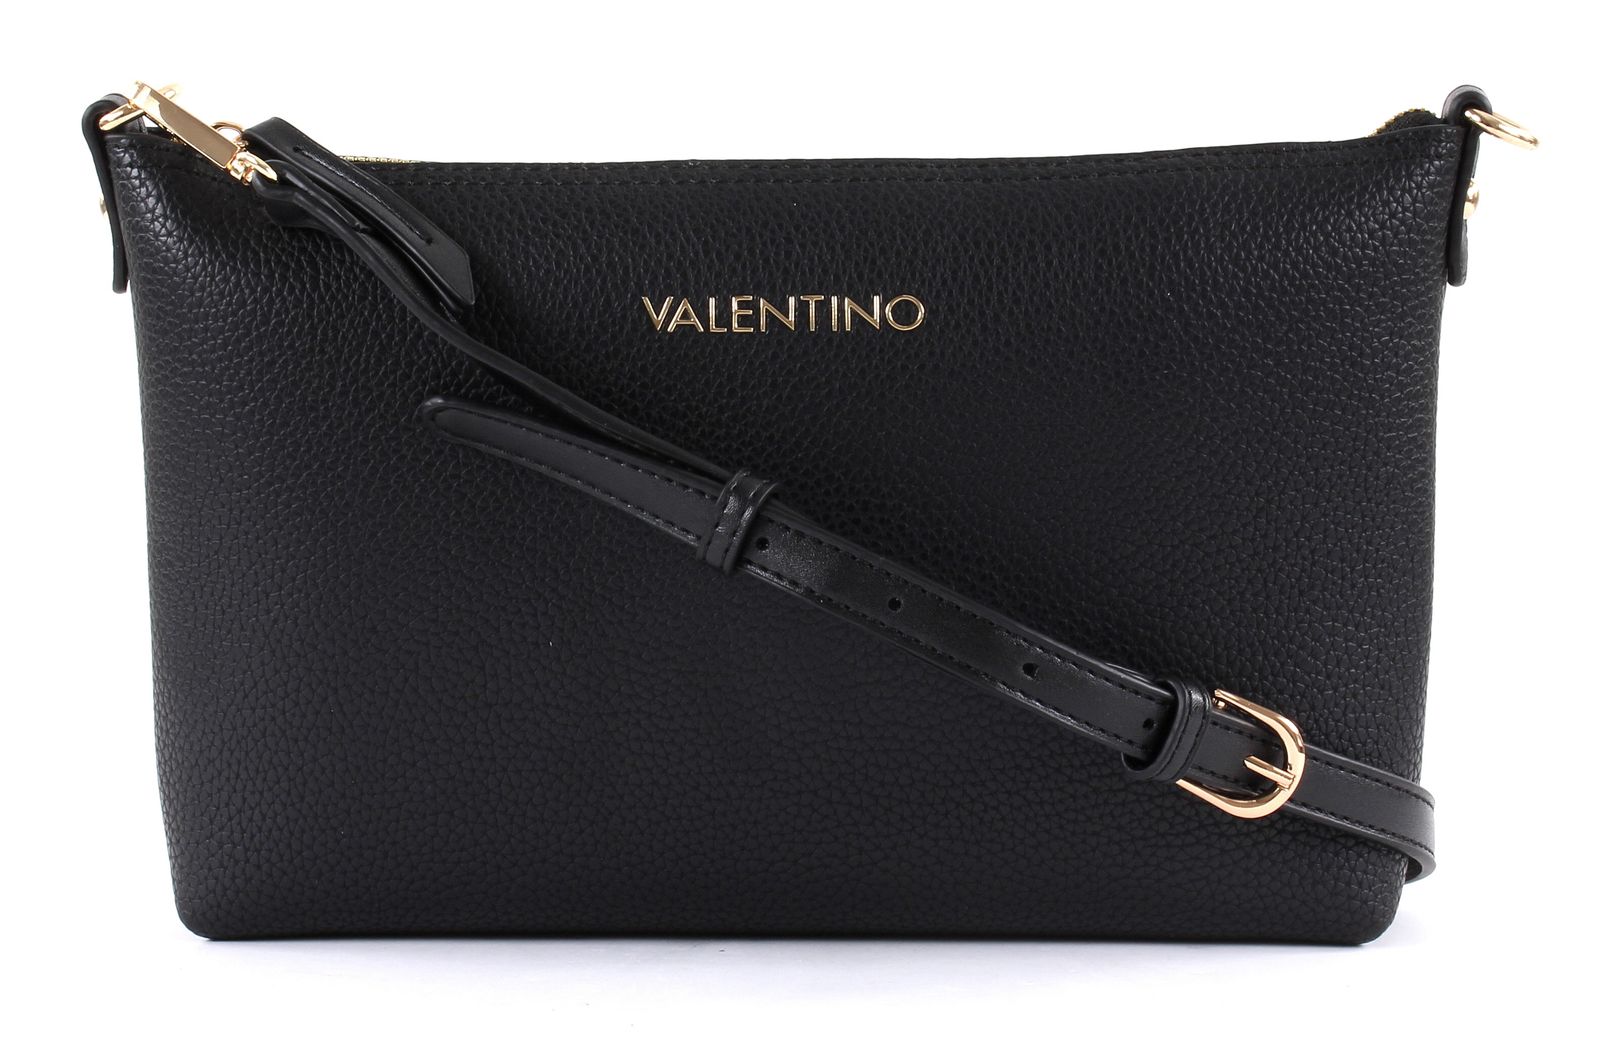 VALENTINO Superman Clutch Nero | Buy bags, purses & accessories online ...